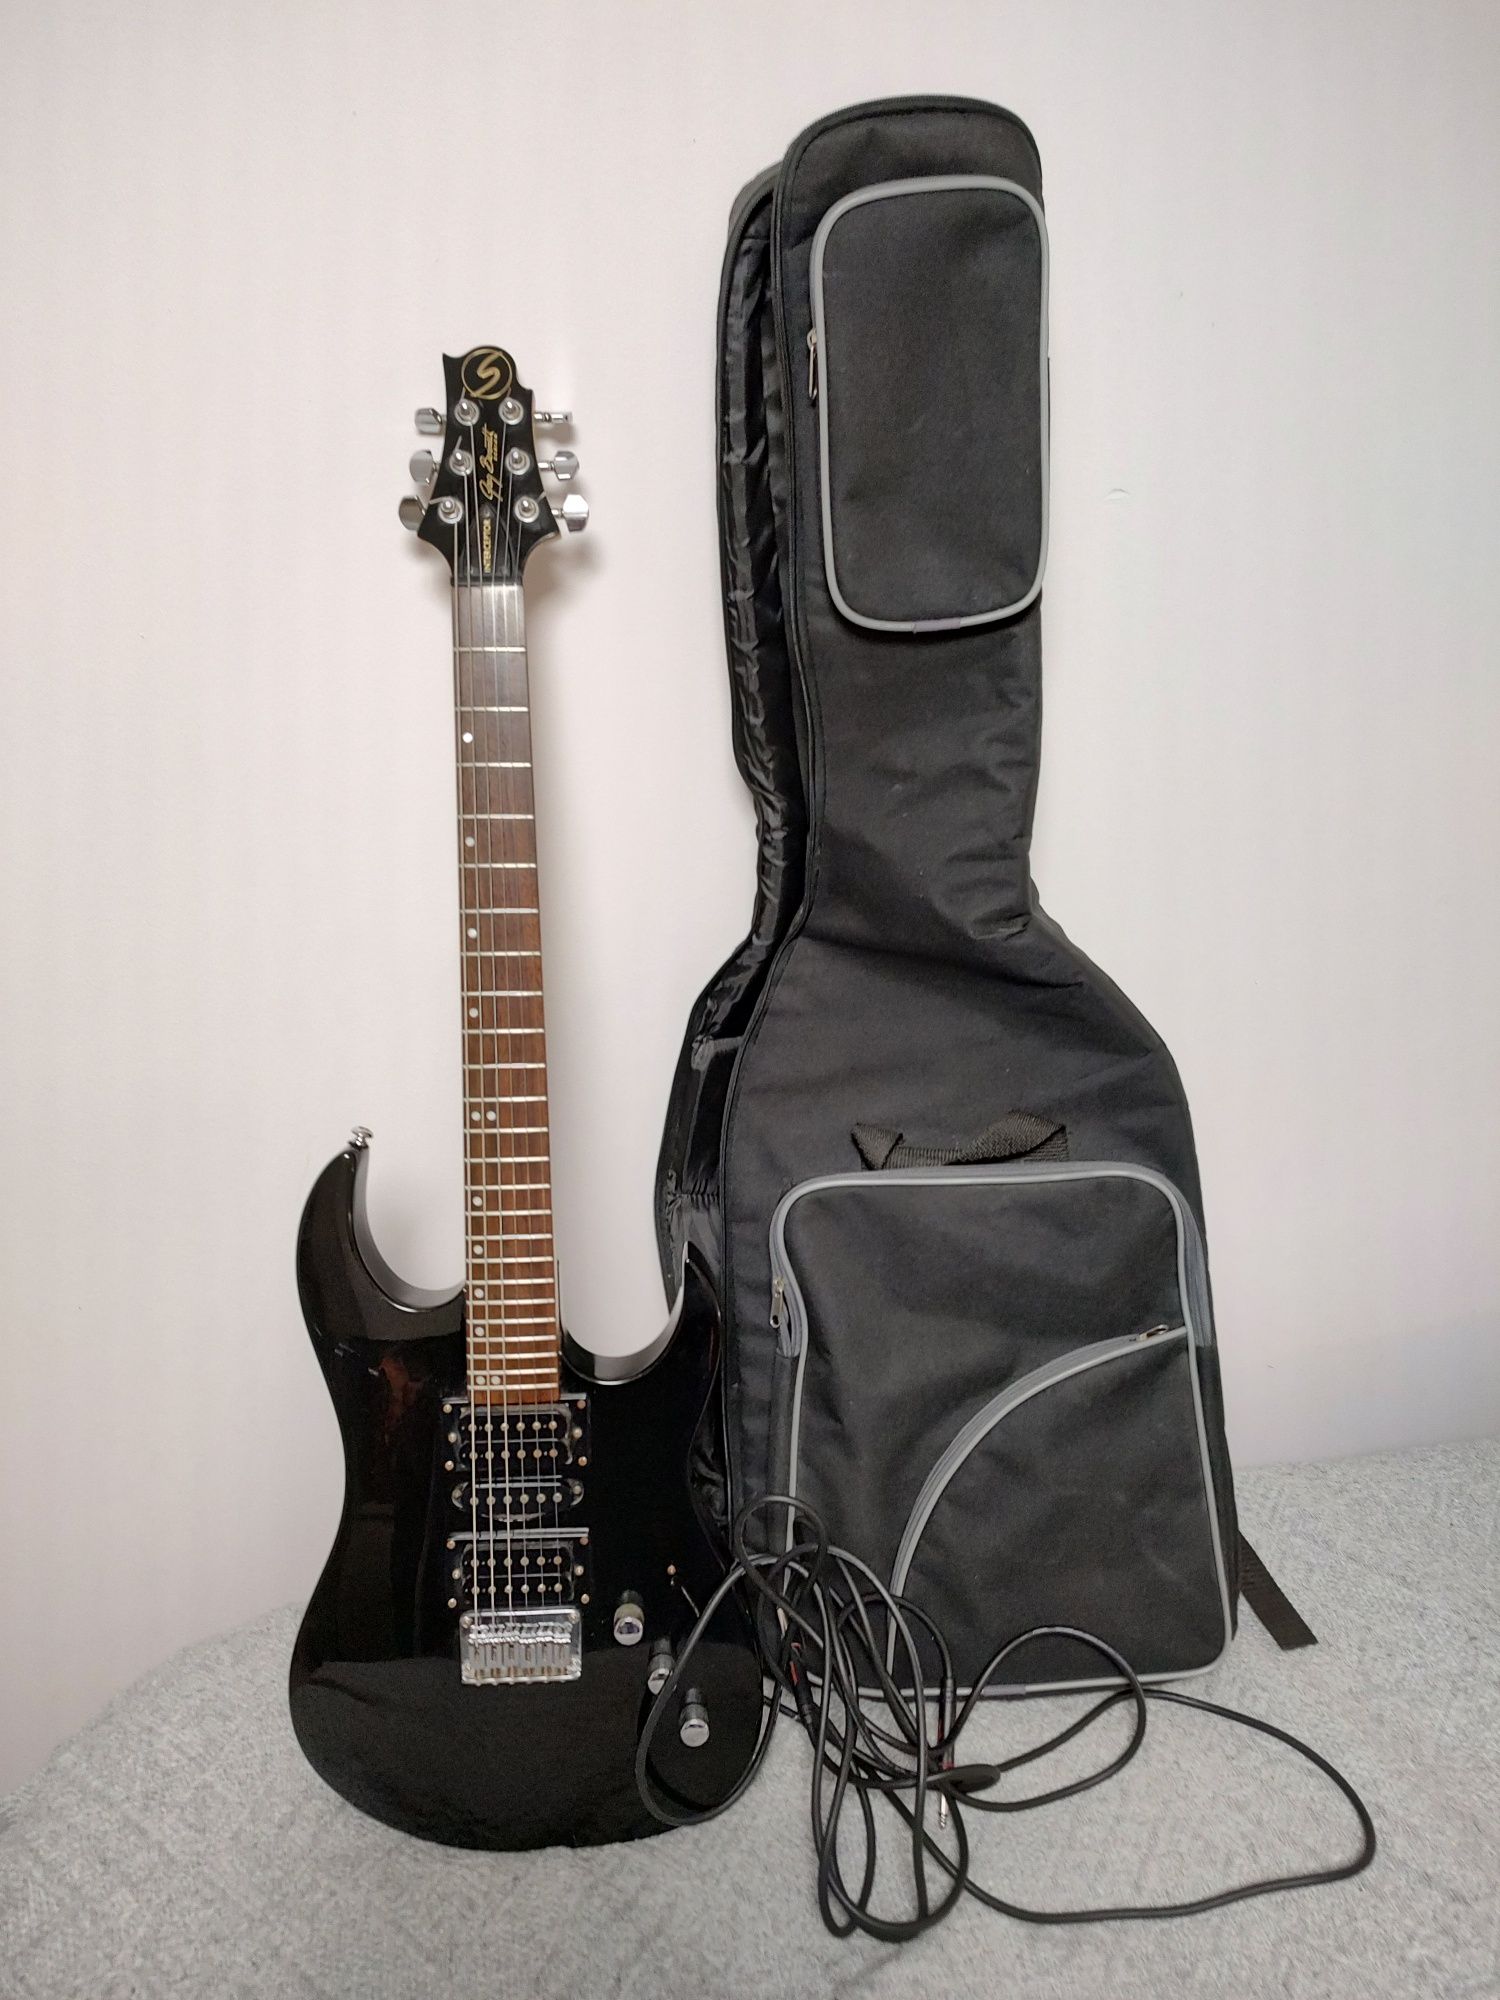 Samick Interceptor gitara elektryczna Superstrat Świetny instrument !!